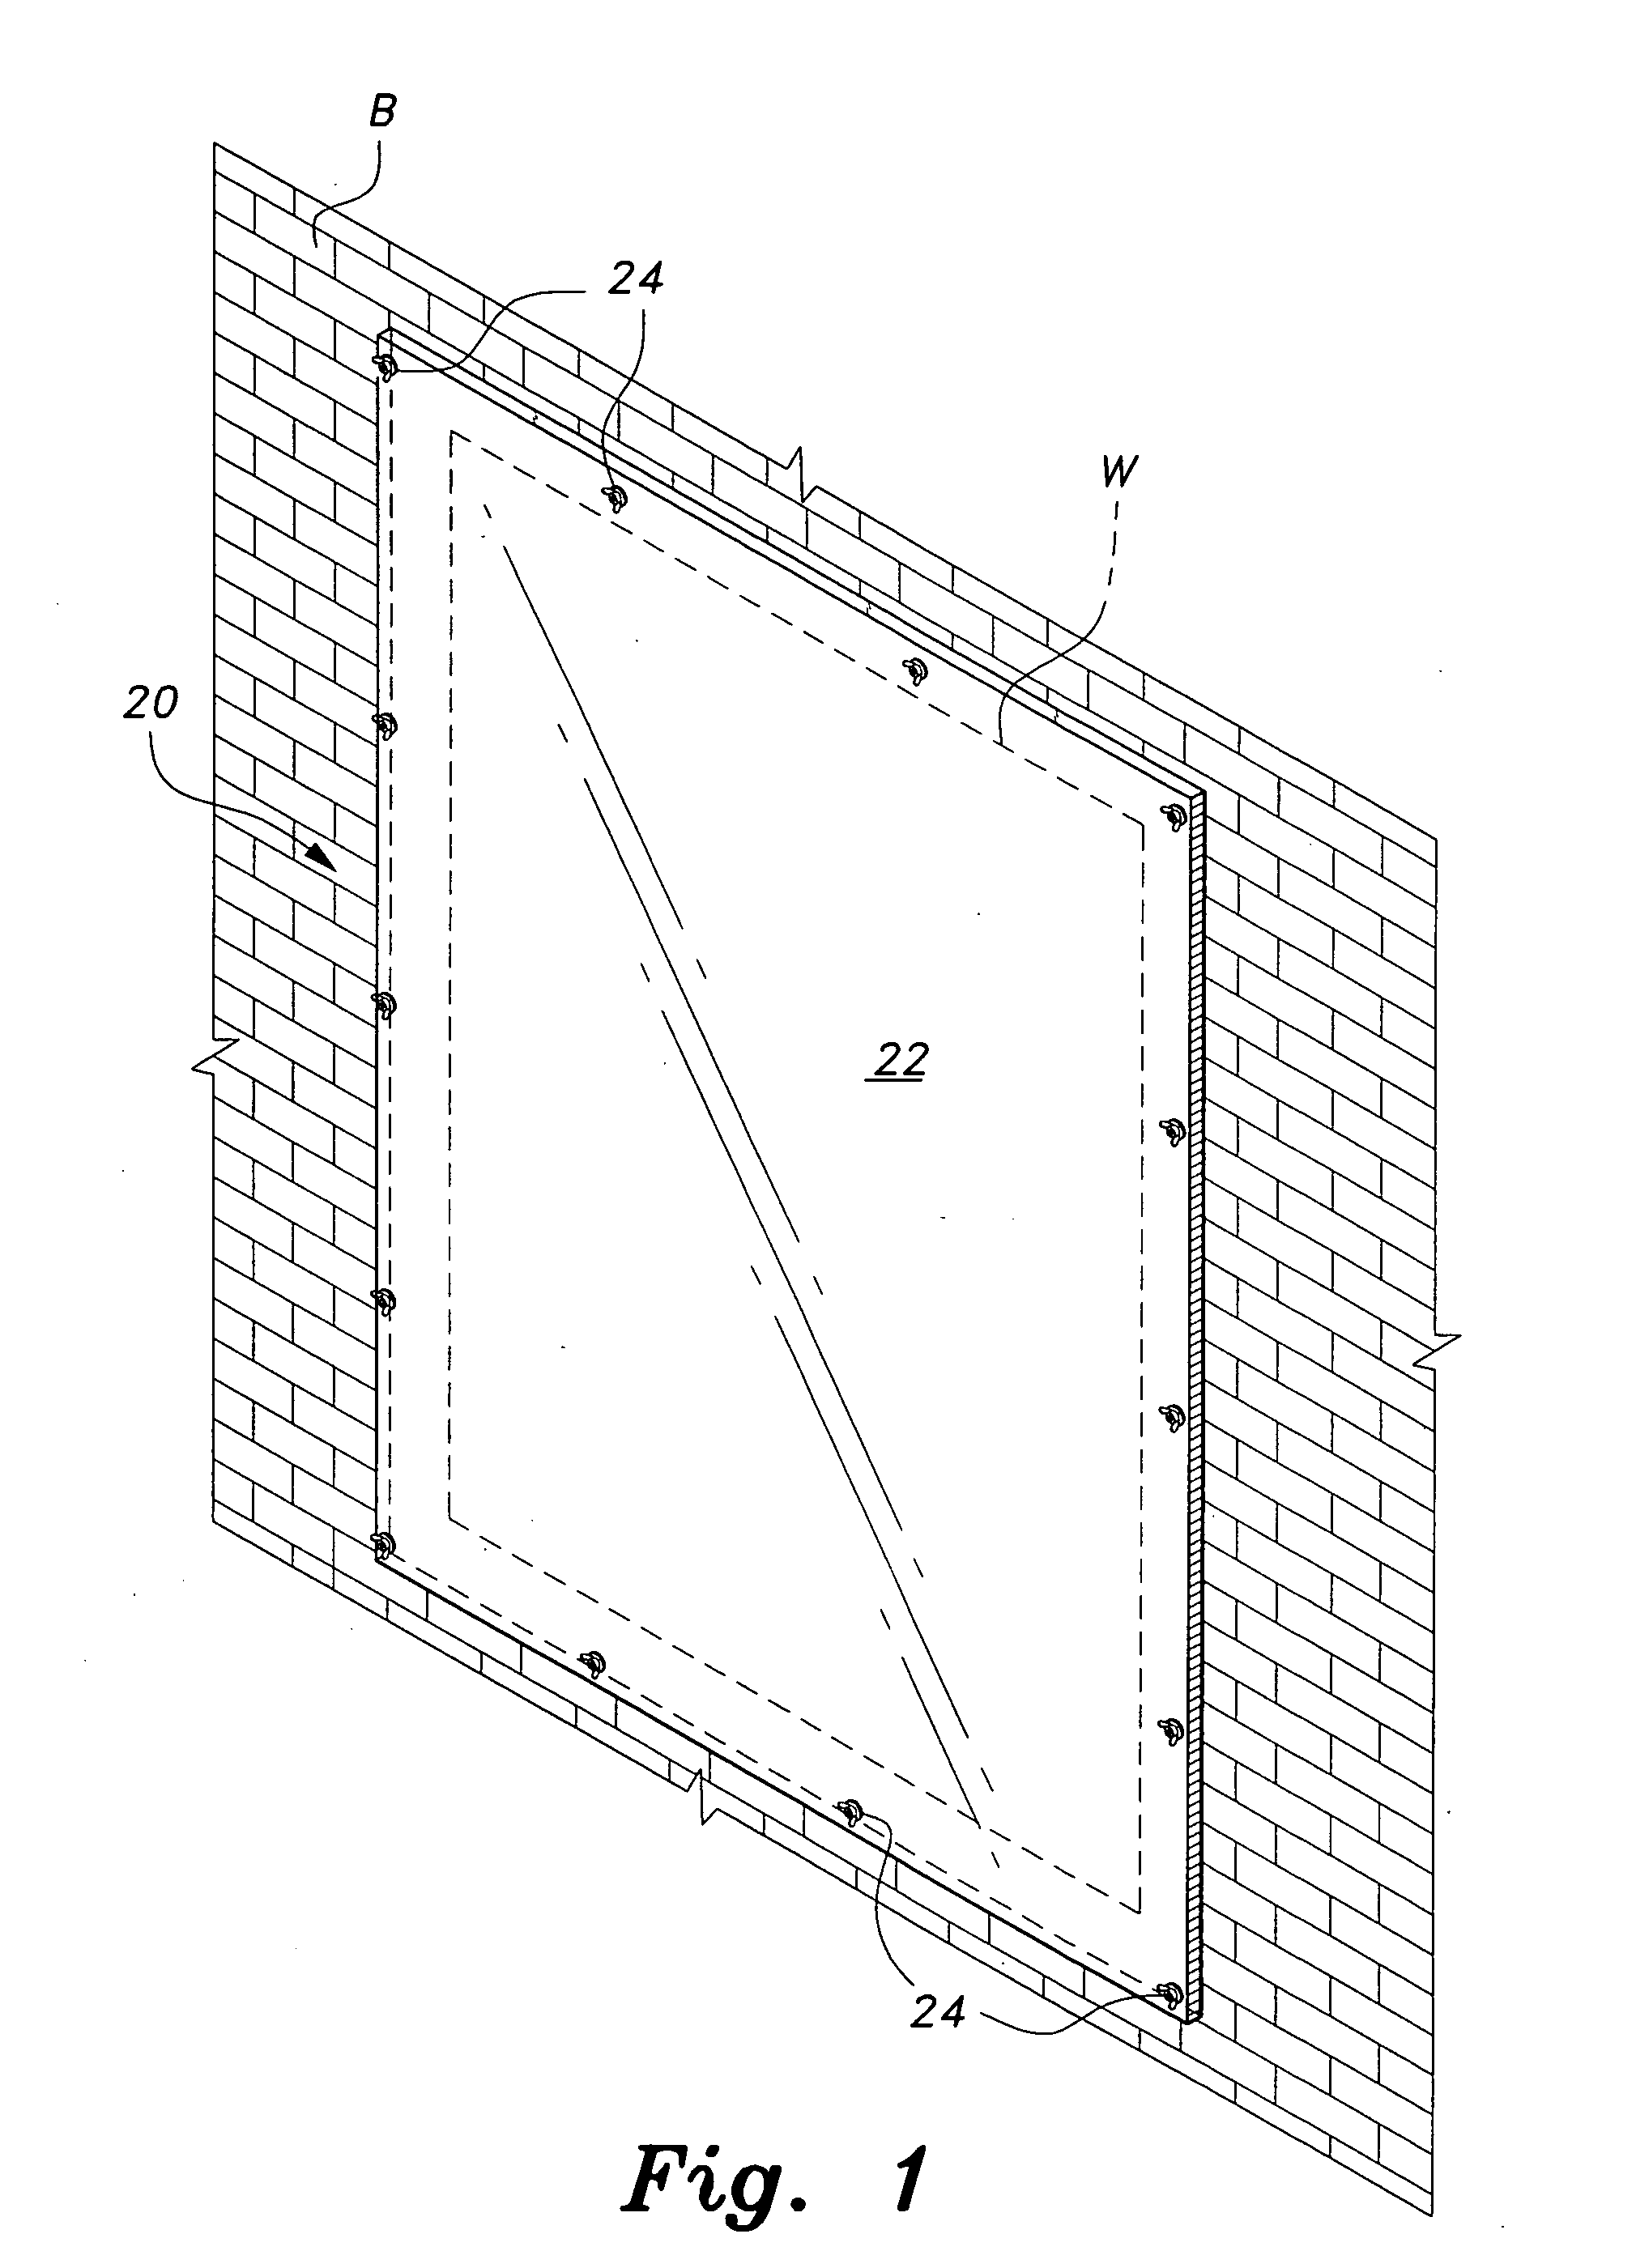 Corrugated plastic storm shutter system